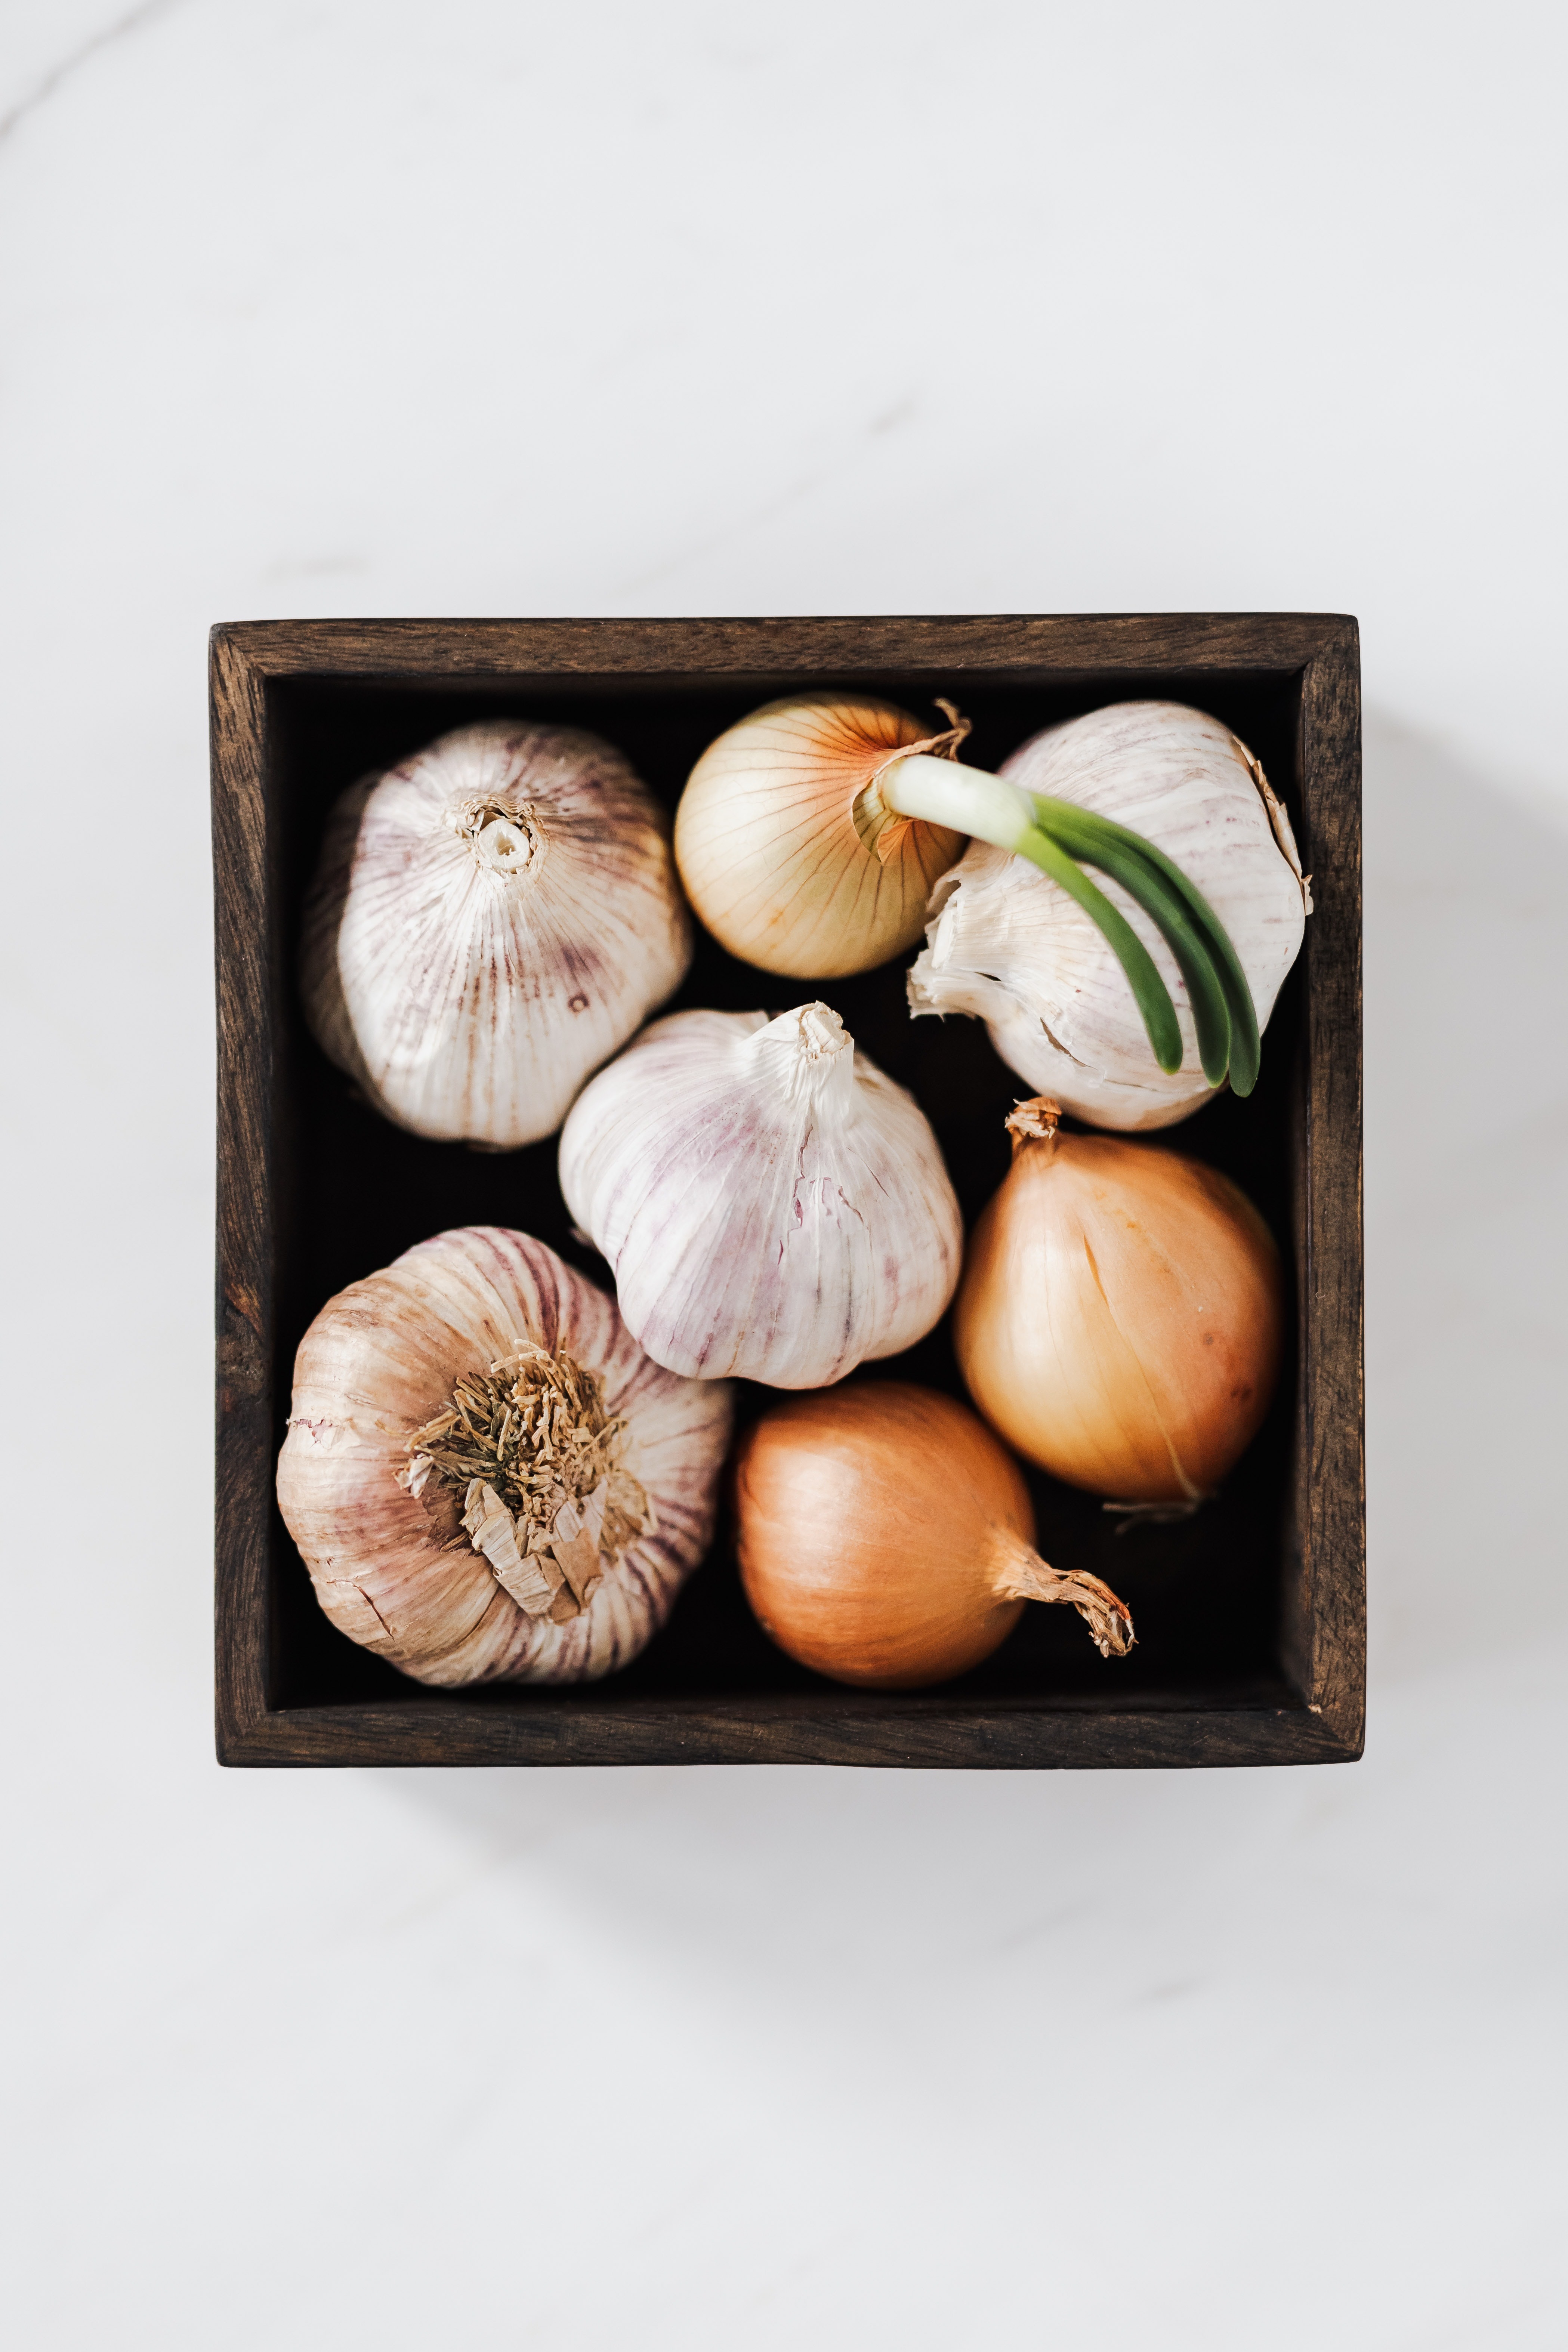 Garlic and Onion Health Benefits